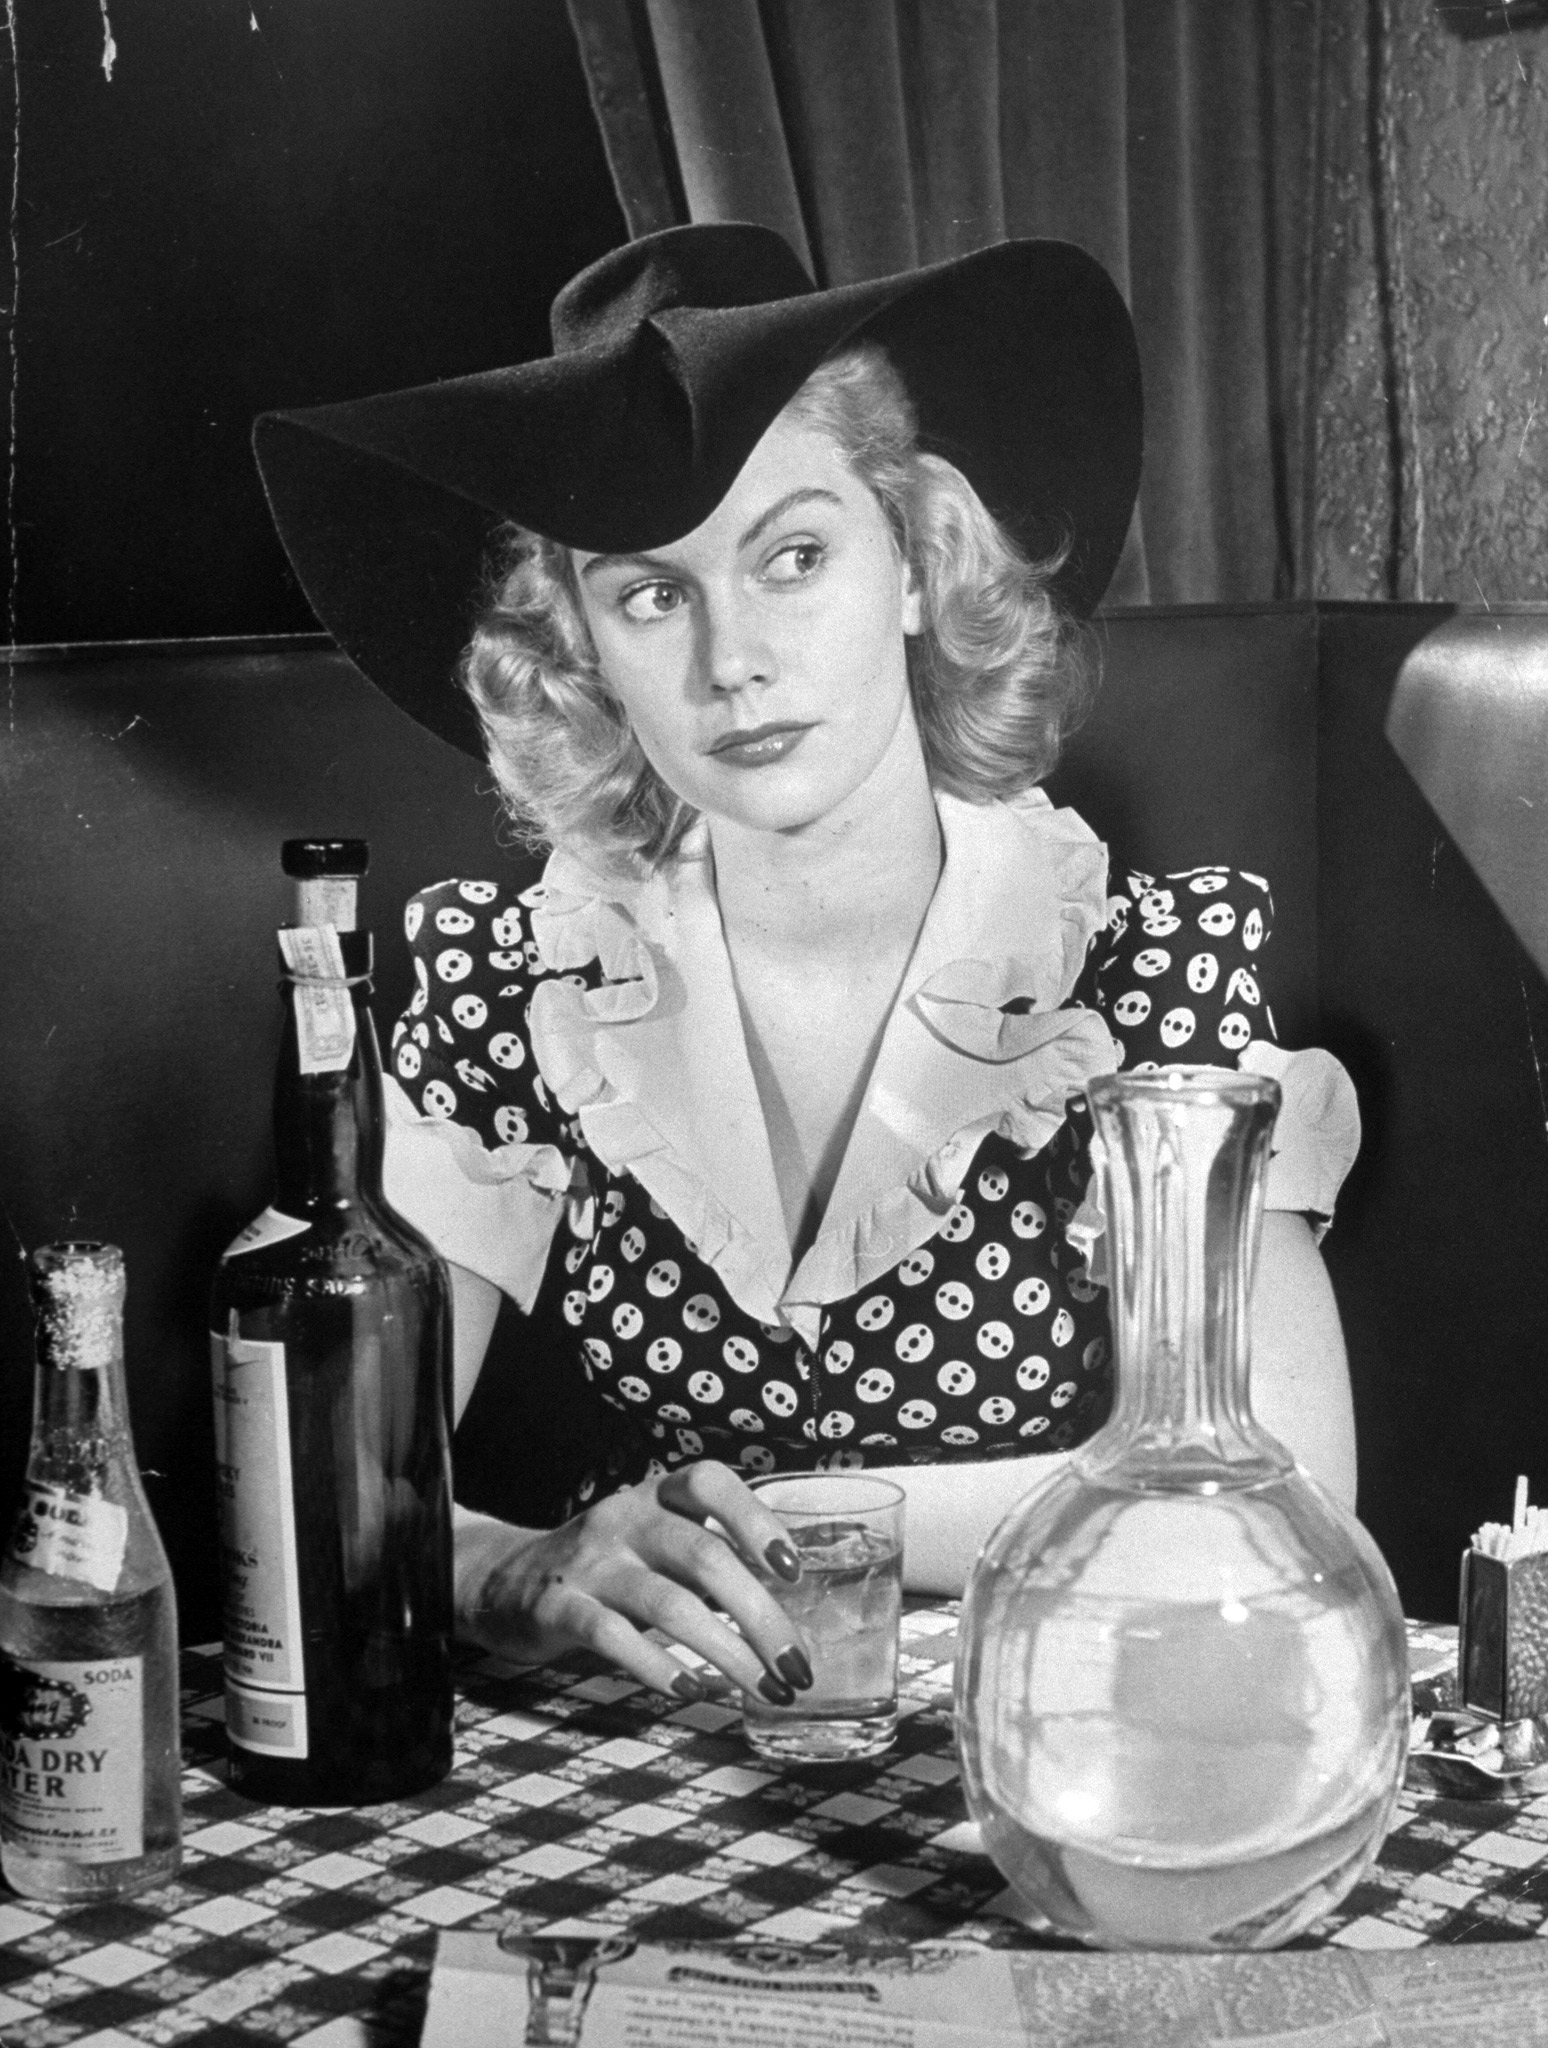 White Collar Girl Photo Essay, 1940